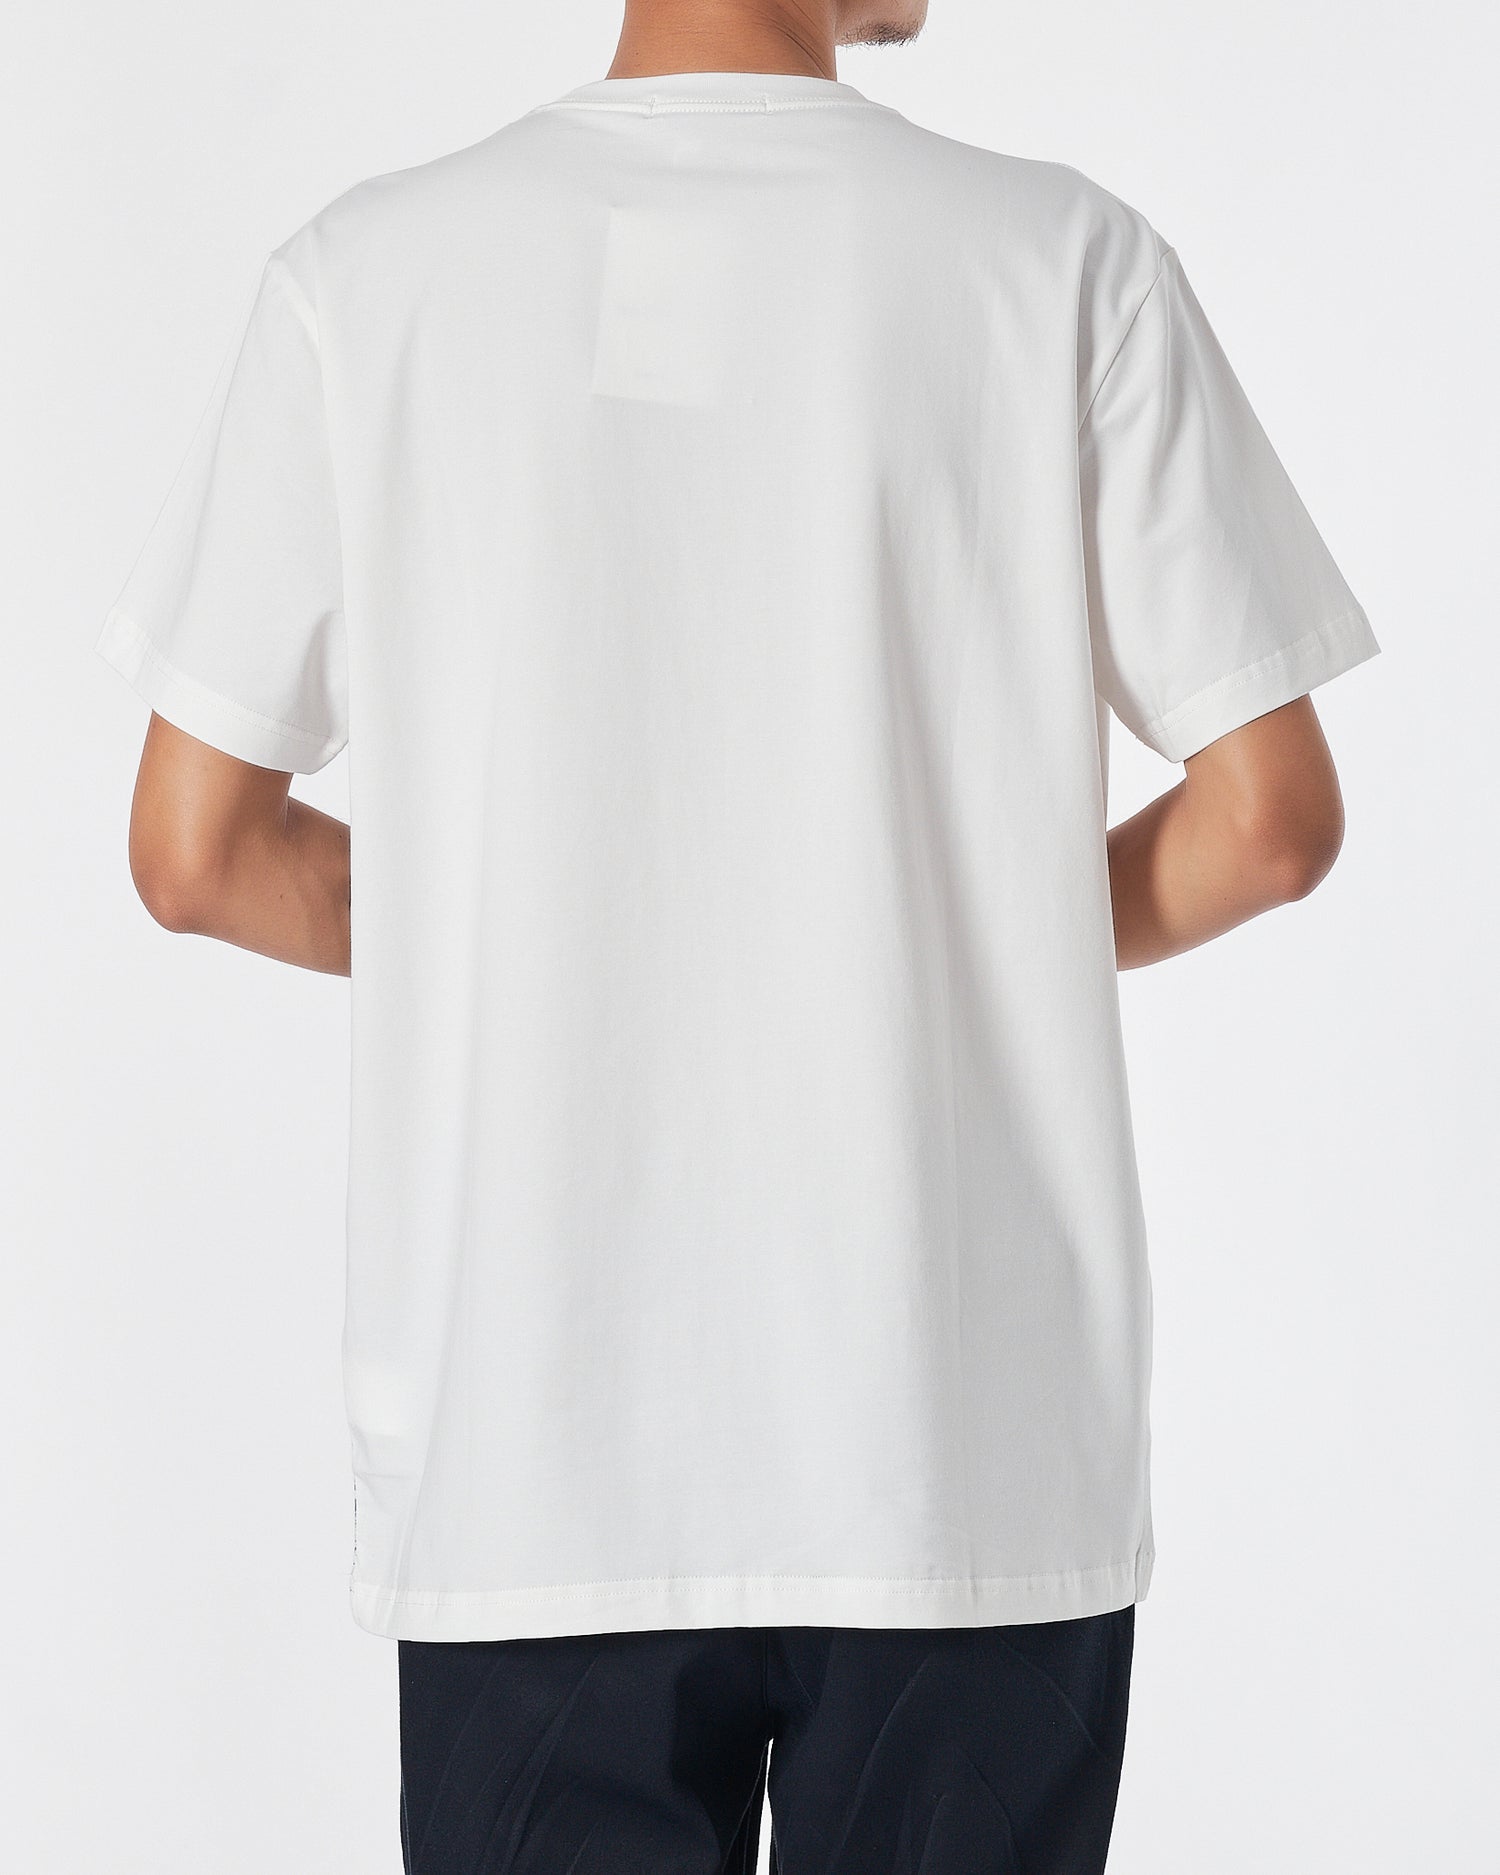 MON Logo Printed Men White T-Shirt 15.90